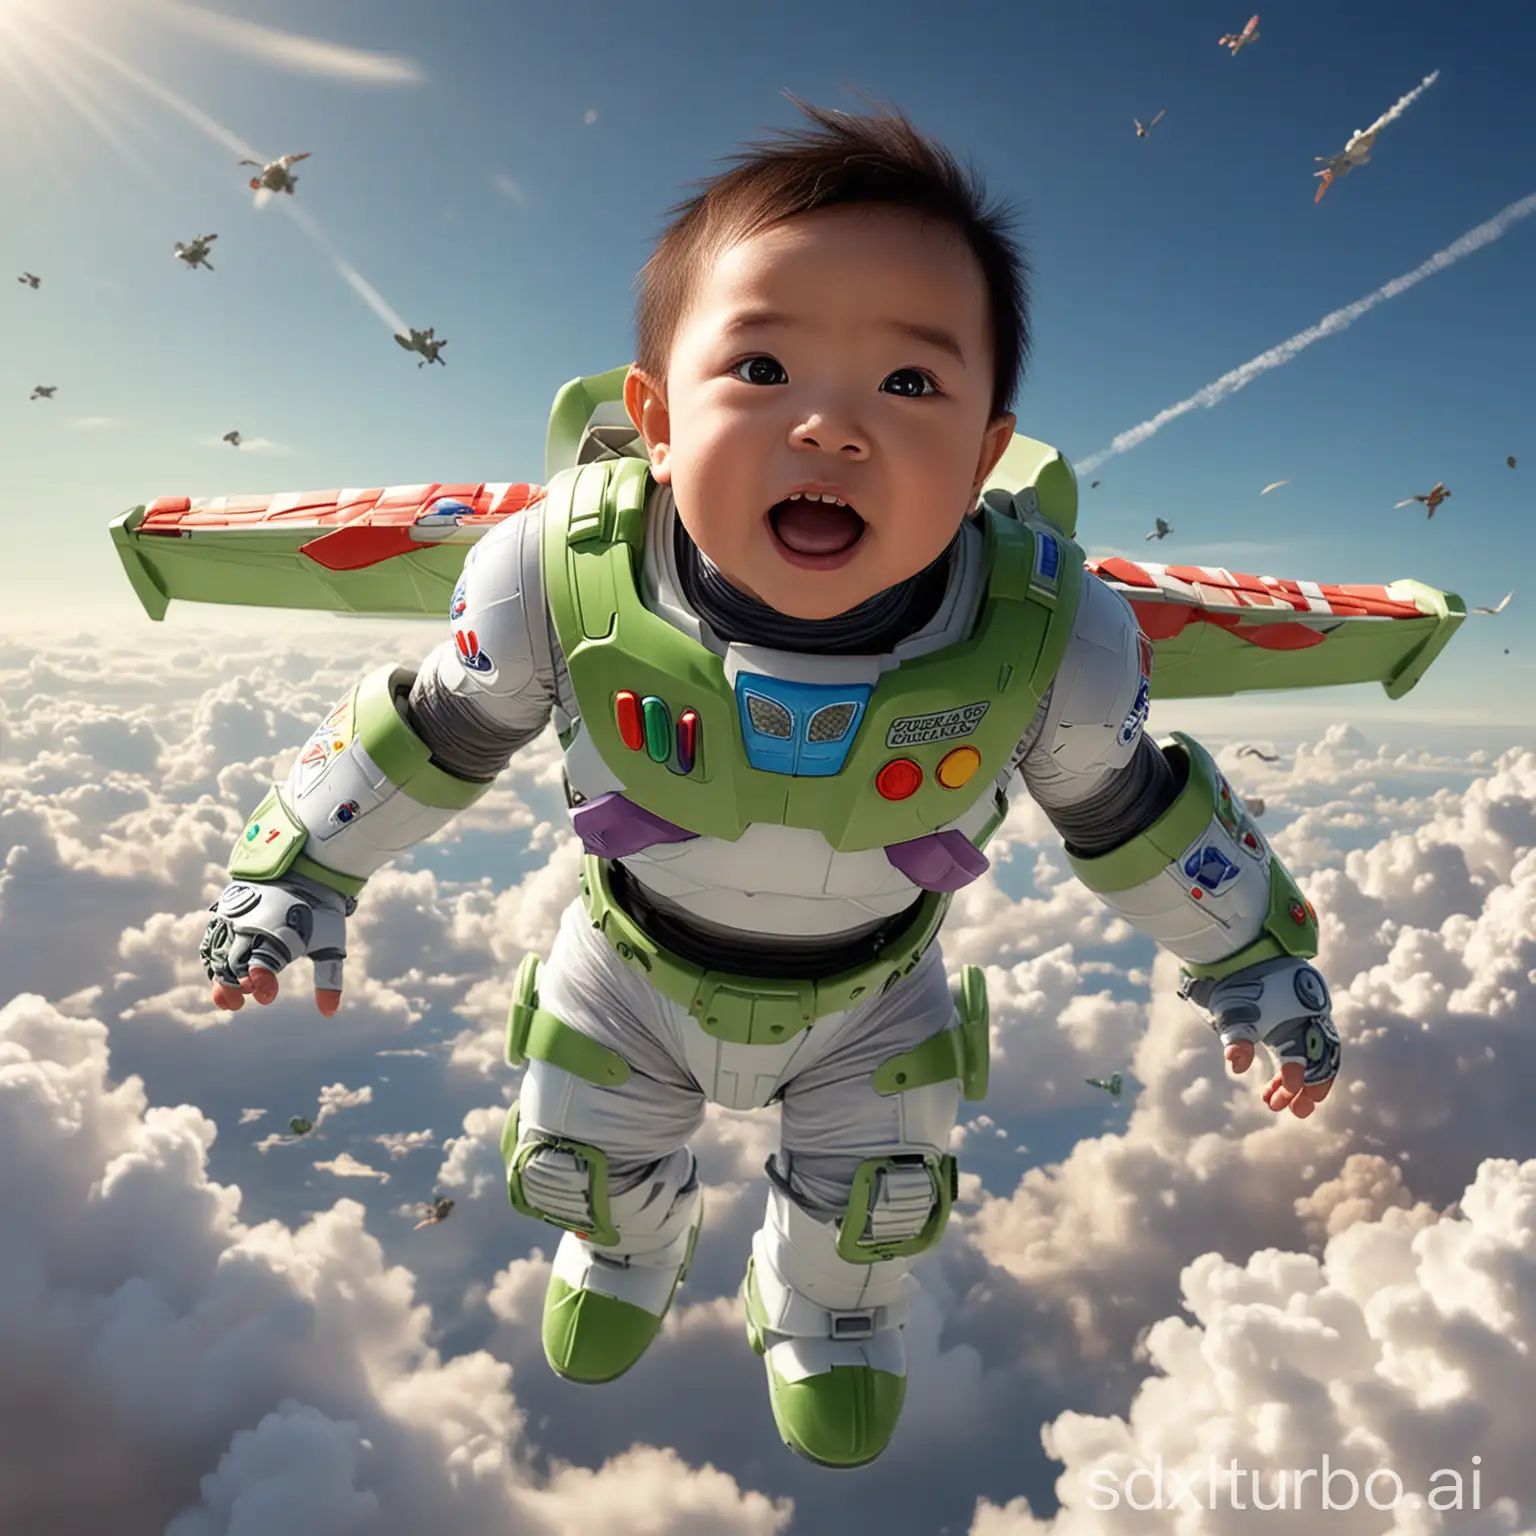 Adorable-Asian-Baby-in-Buzz-Lightyear-Armor-Soars-Through-Photorealistic-Sky